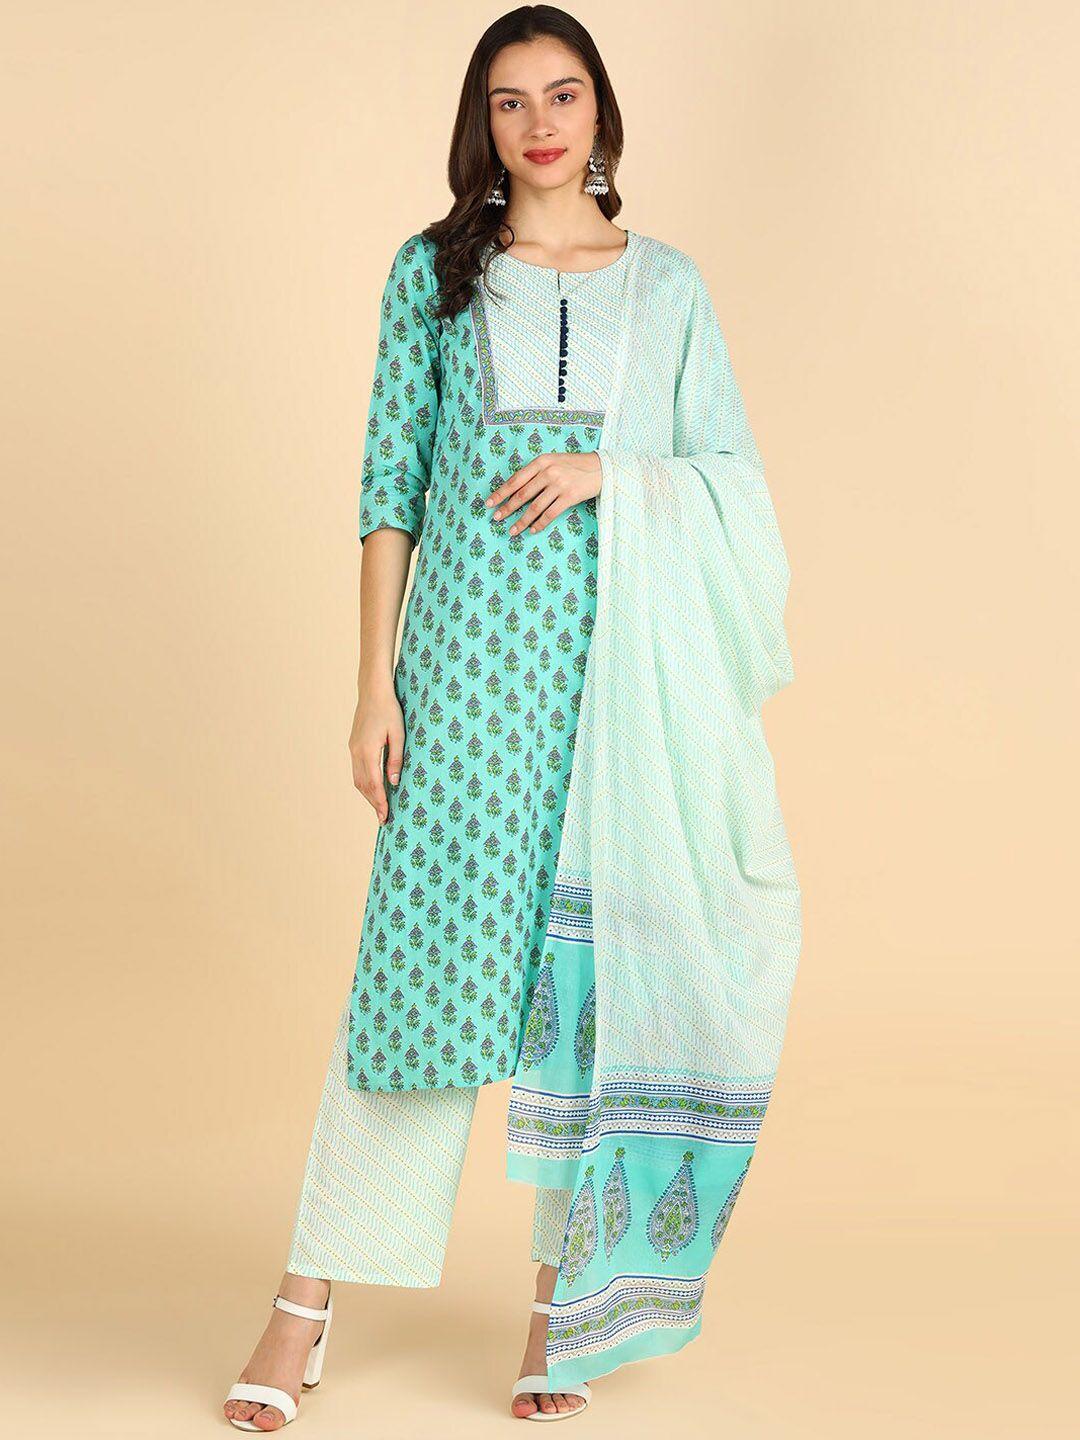 znx clothing floral printed pure cotton kurta with palazzos & dupatta